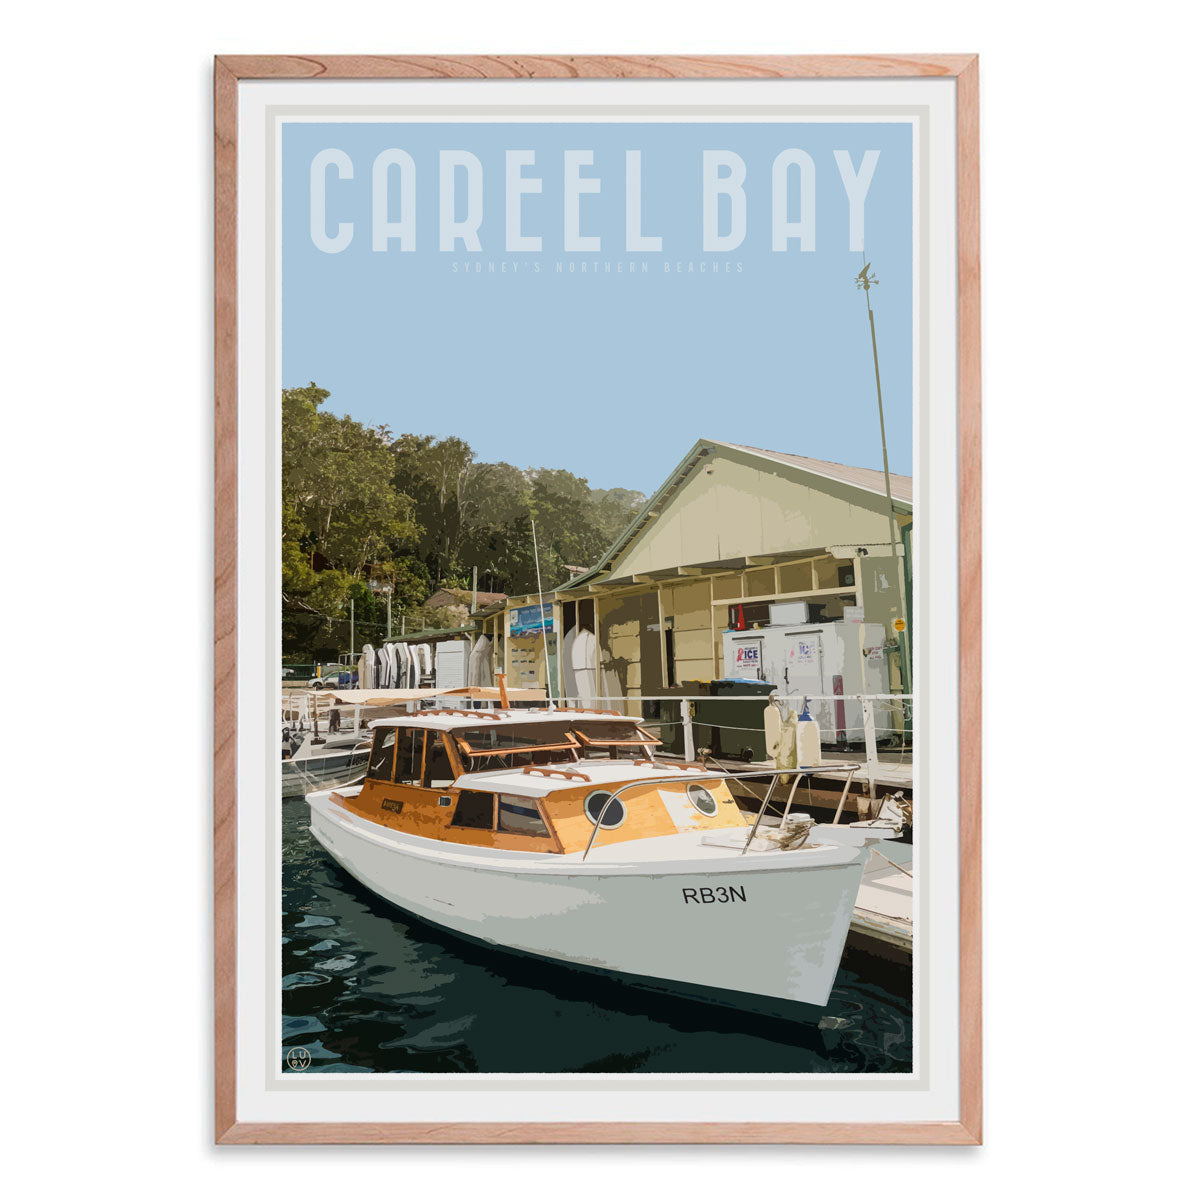 Careel Bay framed print. Vintage style travel design by Places we luv